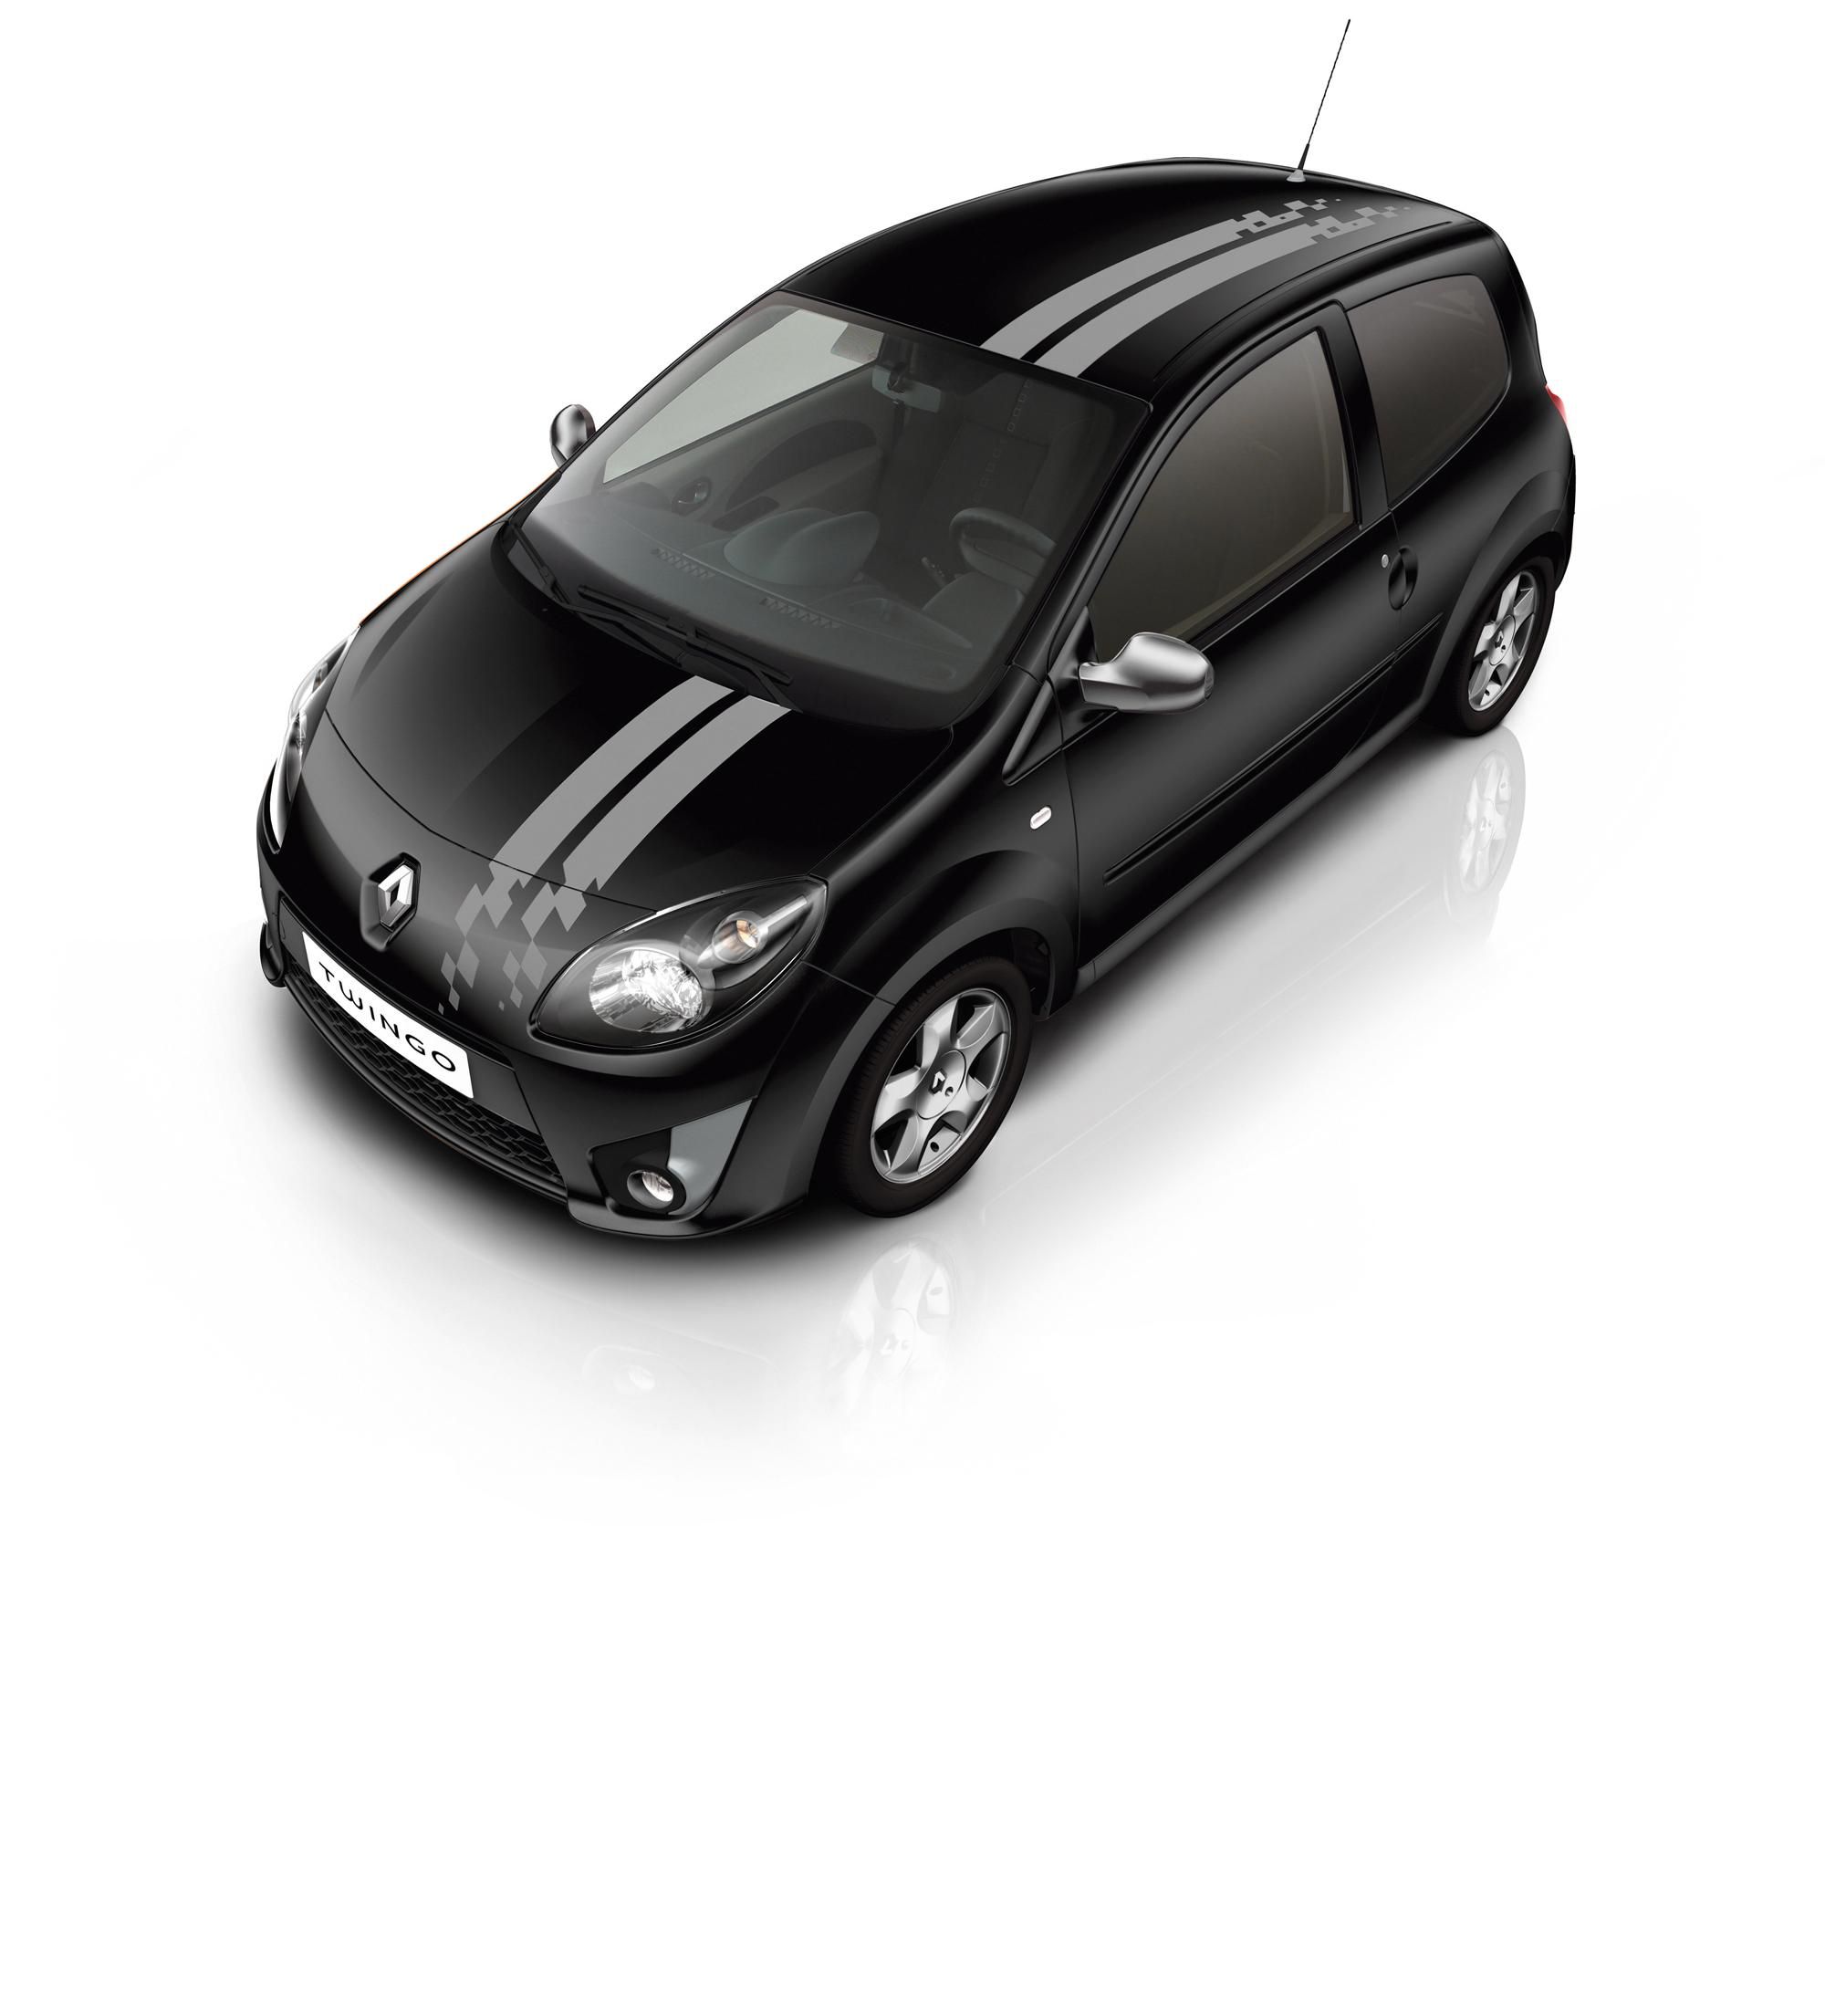 2009 Renault Twingo Customization Options